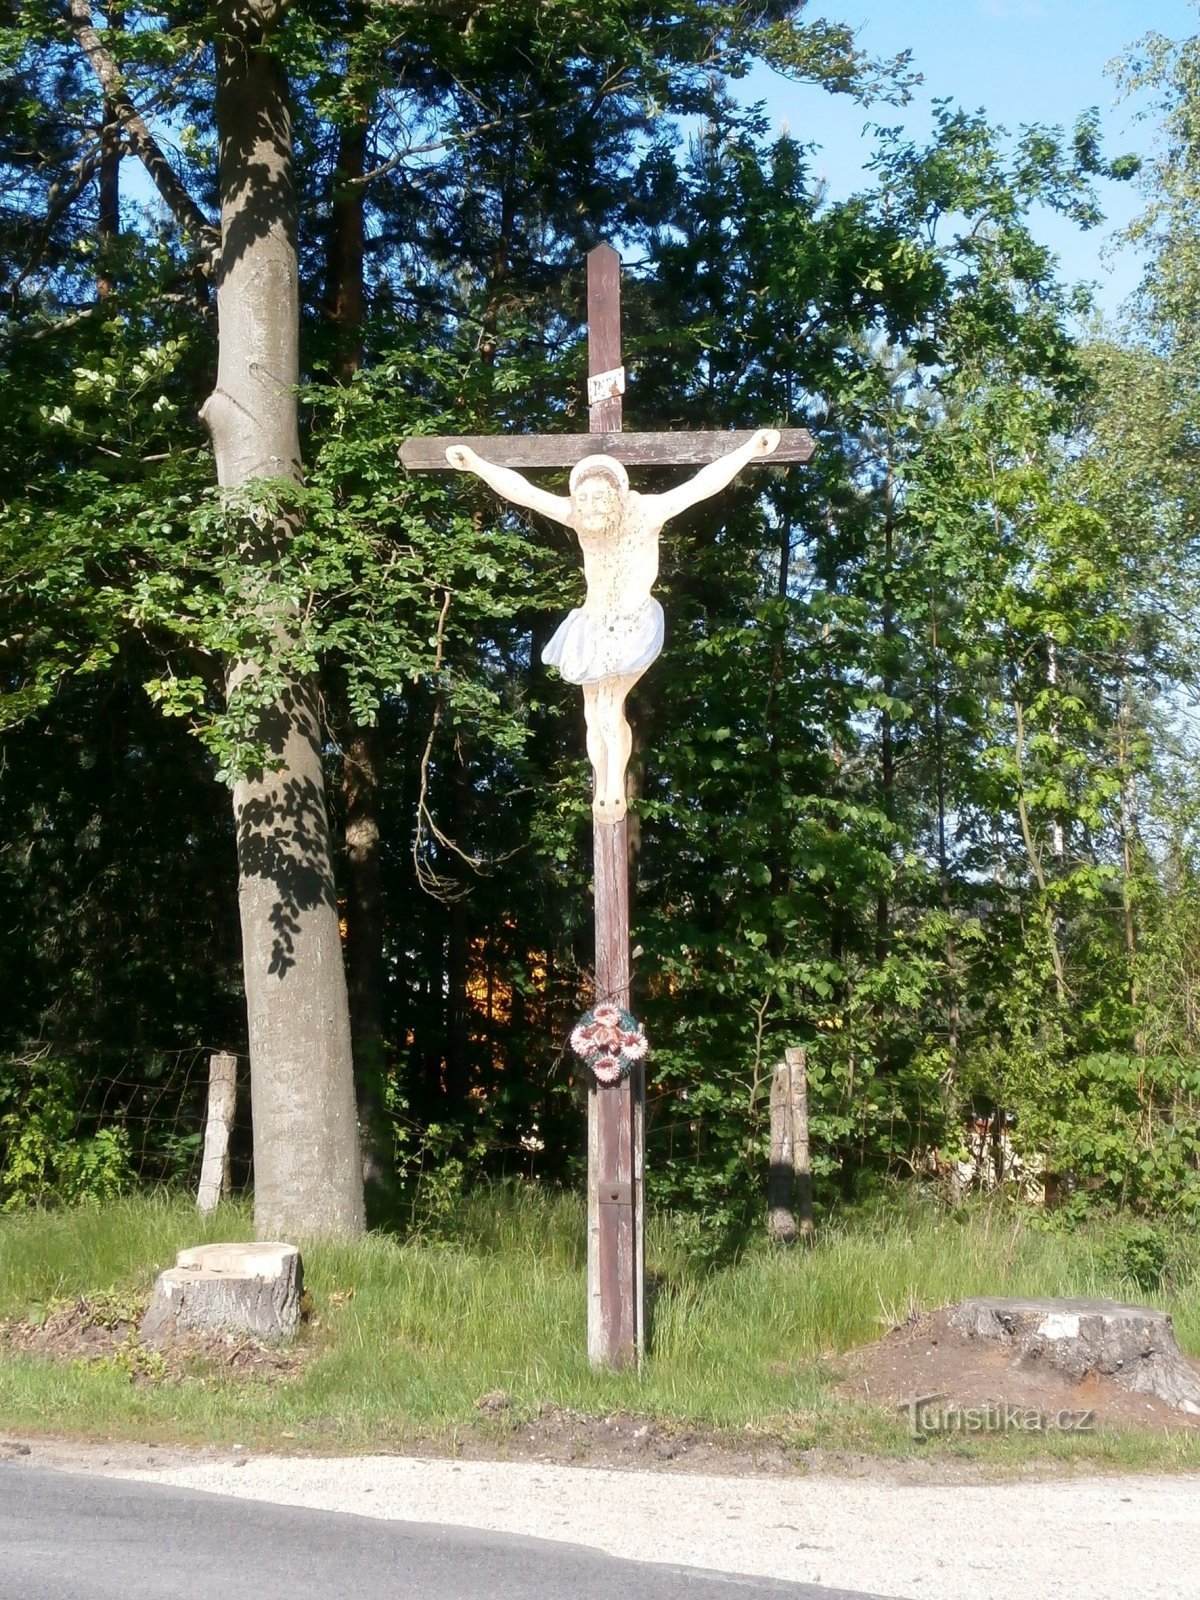 Croce vicino a Marokánka (Běleč nad Orlicí, 27.5.2017/XNUMX/XNUMX)